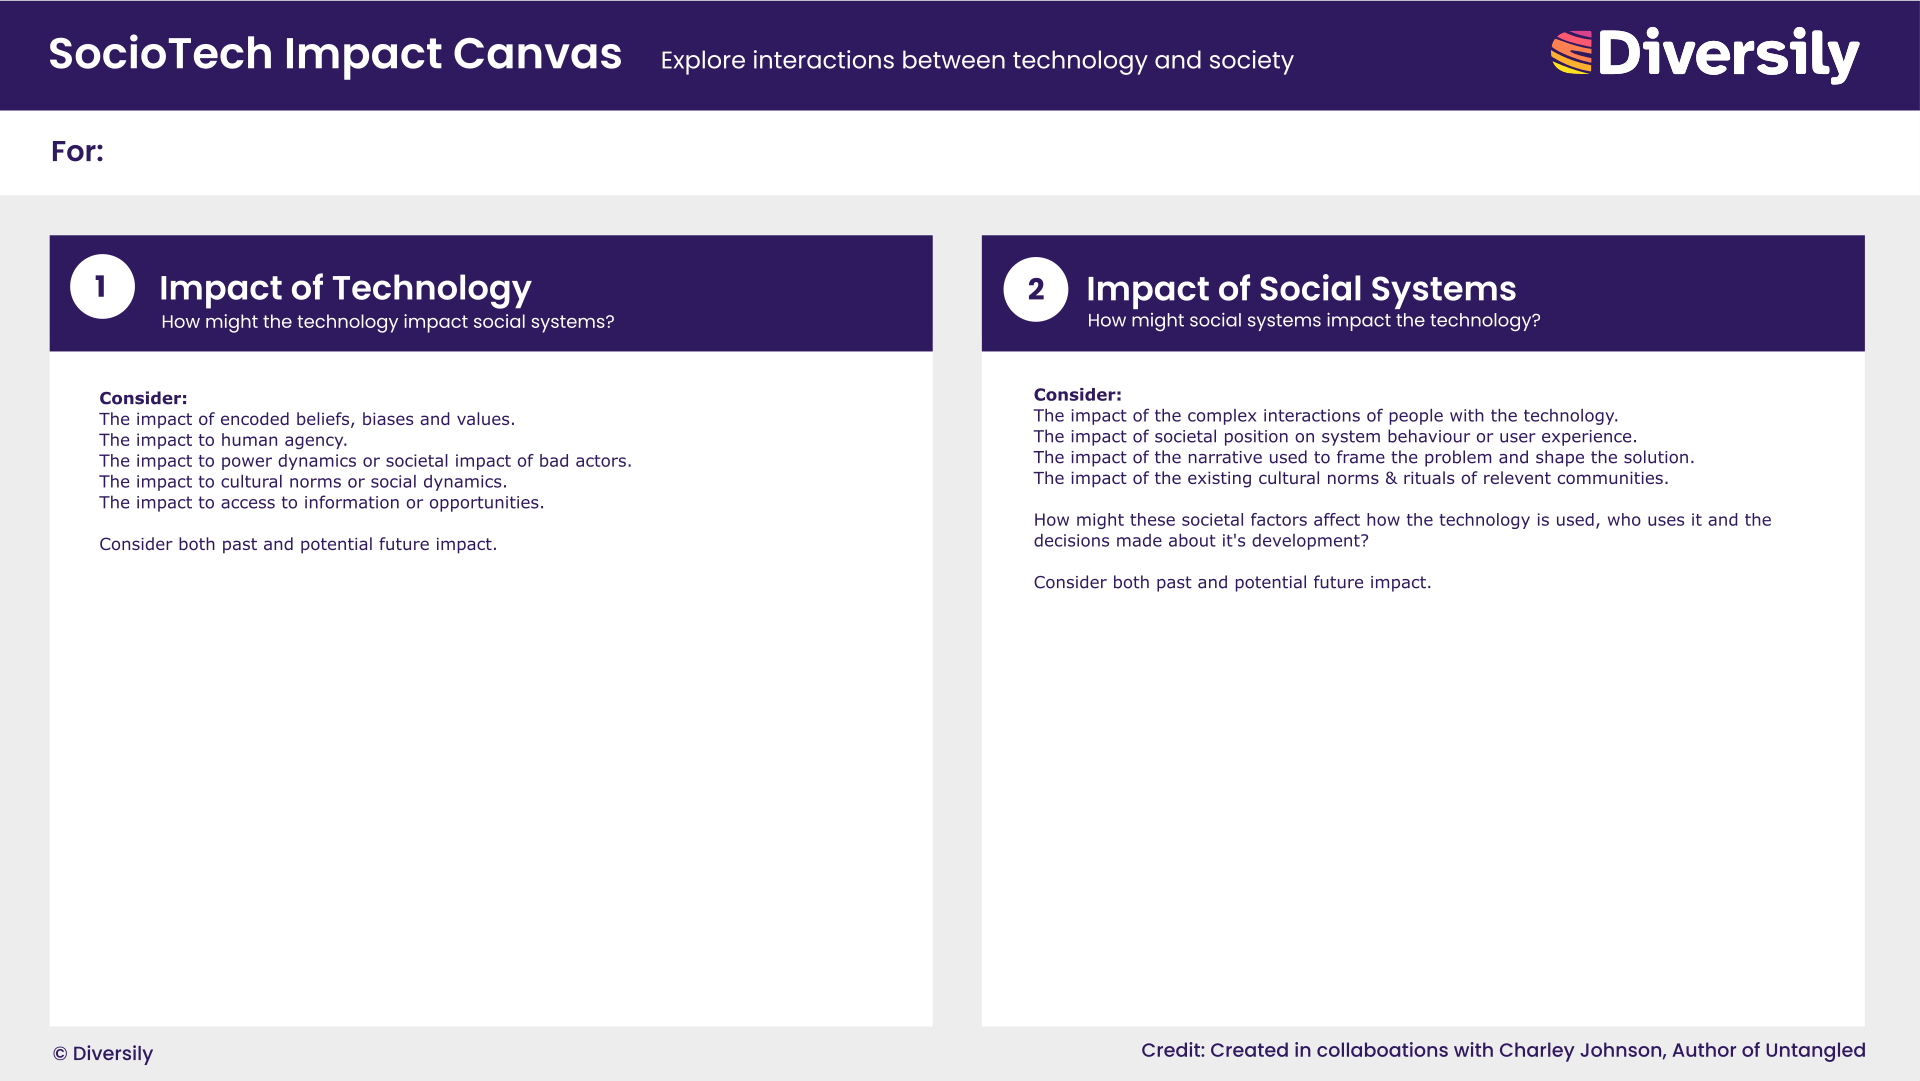 The SocioTech Impact Canvas